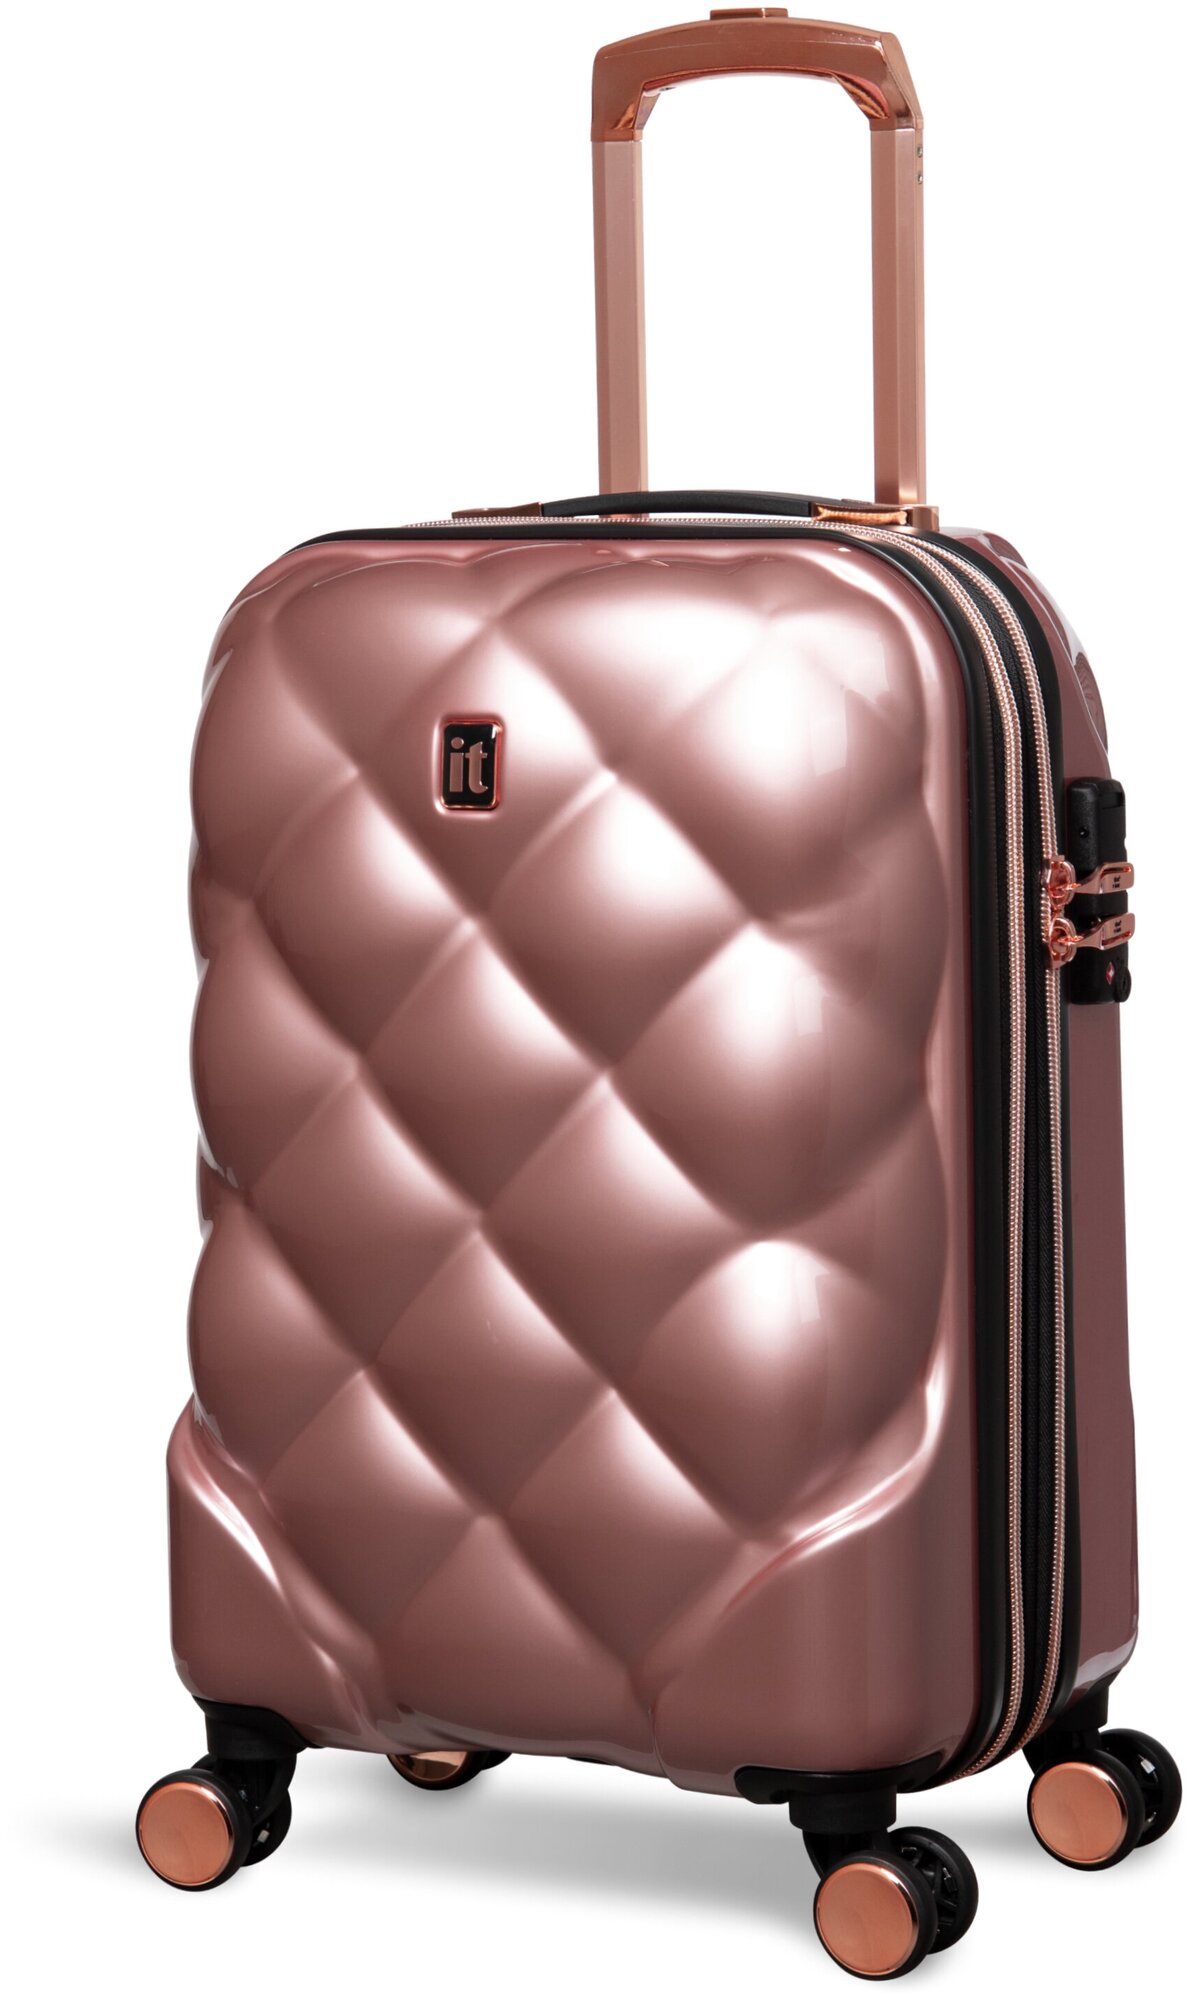 Комплект чемоданов IT Luggage